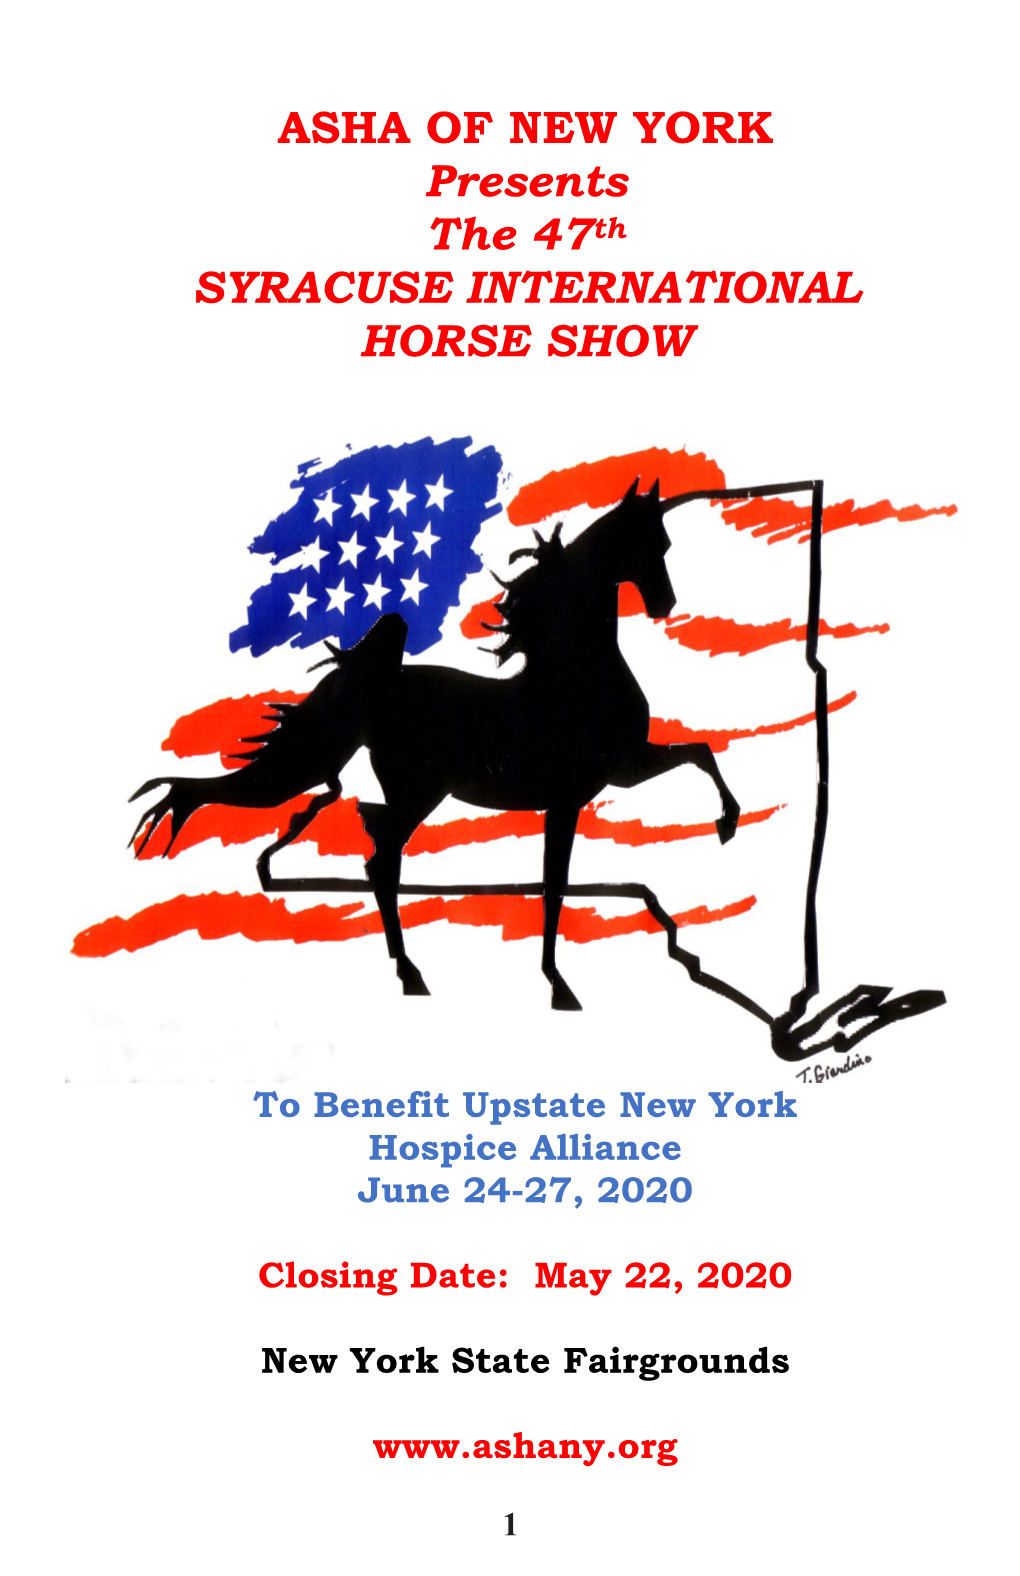 ASHA of NEW YORK Presents the 47Th SYRACUSE INTERNATIONAL HORSE SHOW